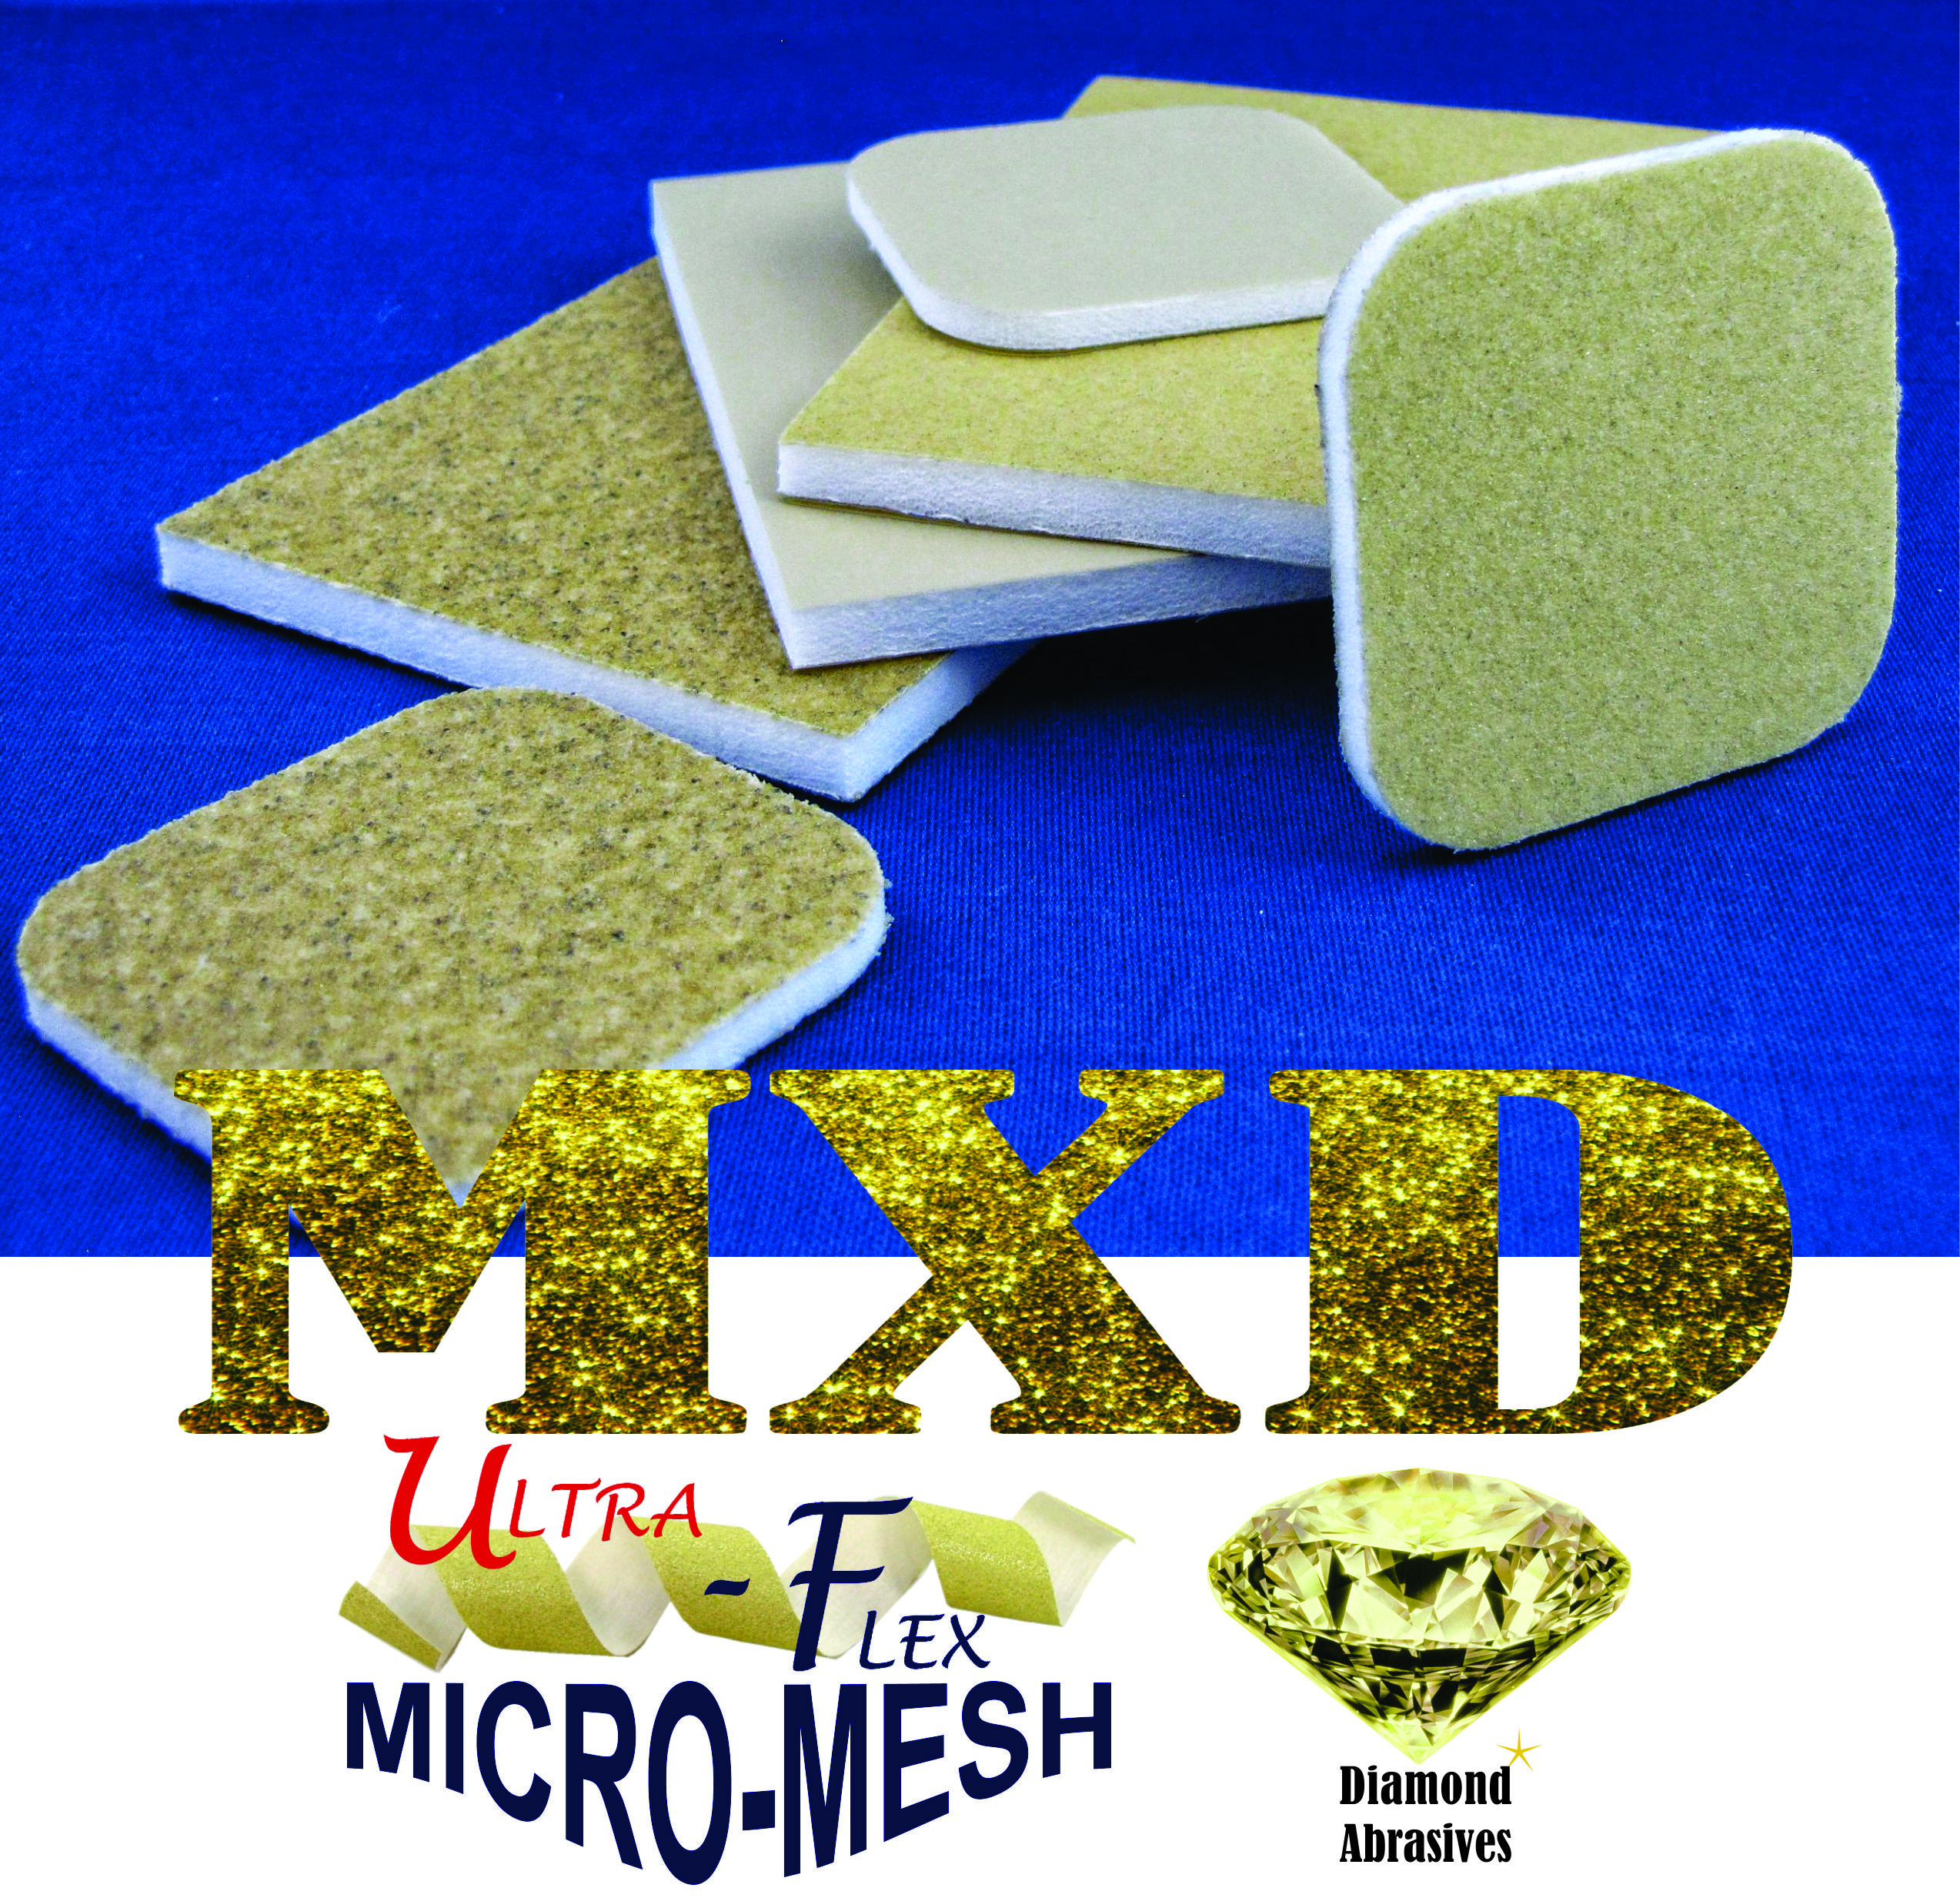 micromesh pads